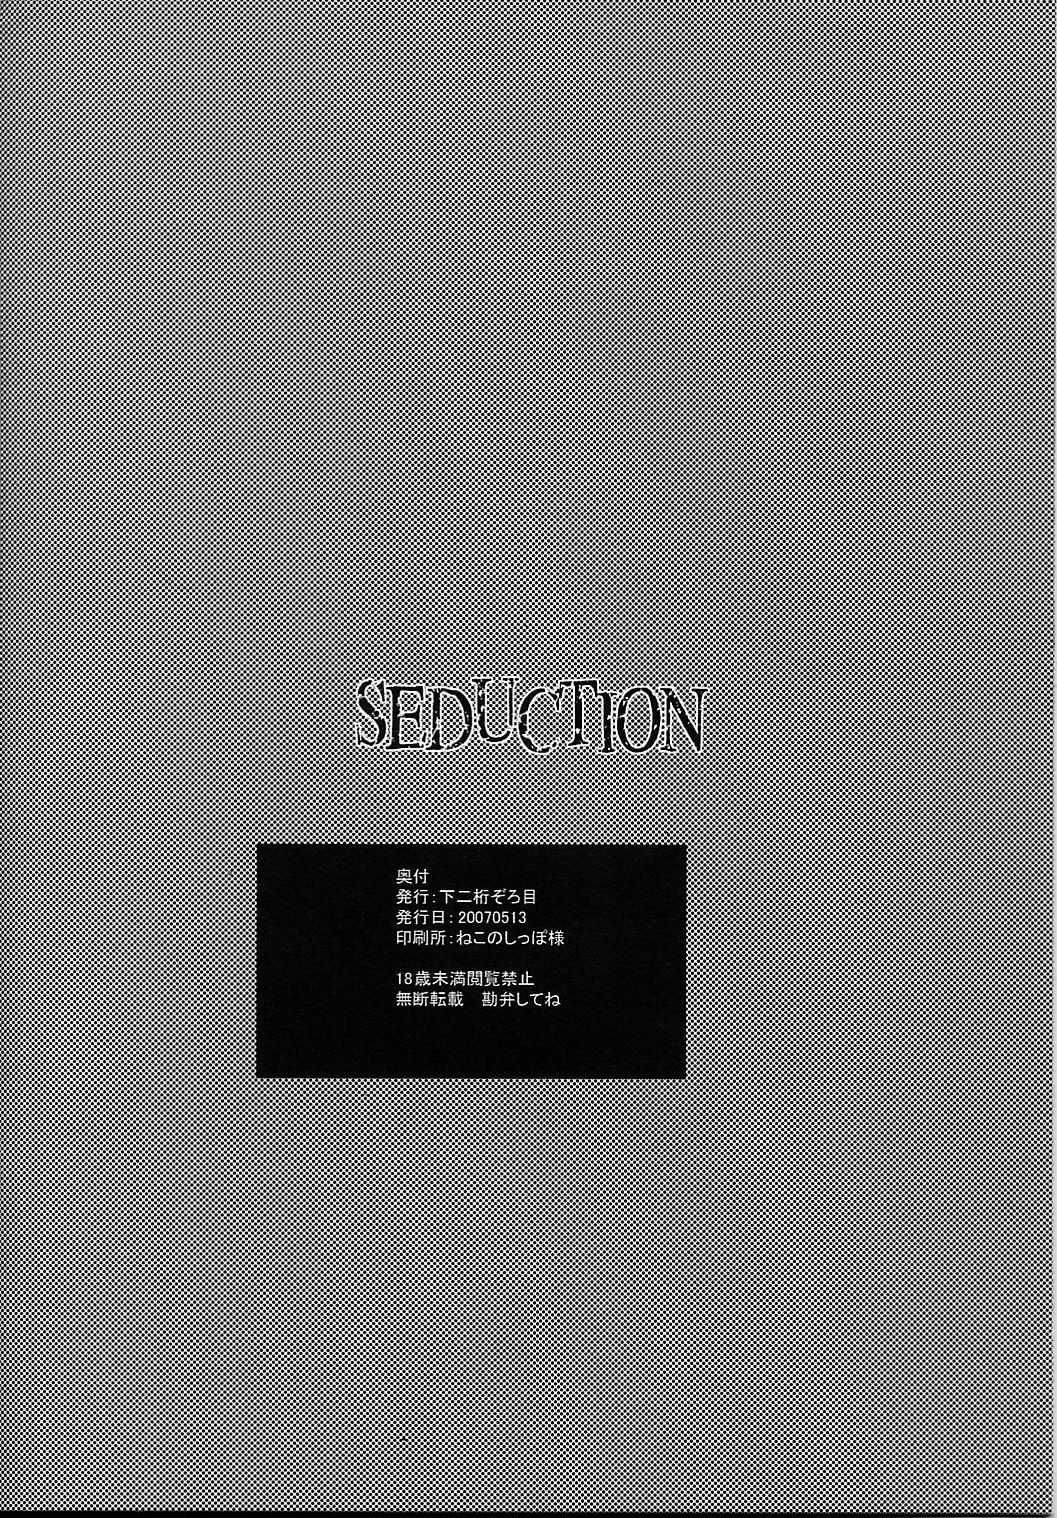 [Shimoniketa Zorome] Seduction (Beatmania IIDX) (同人誌) [下二桁ぞろ目] SEDUCTION (Beatmania IIDX)